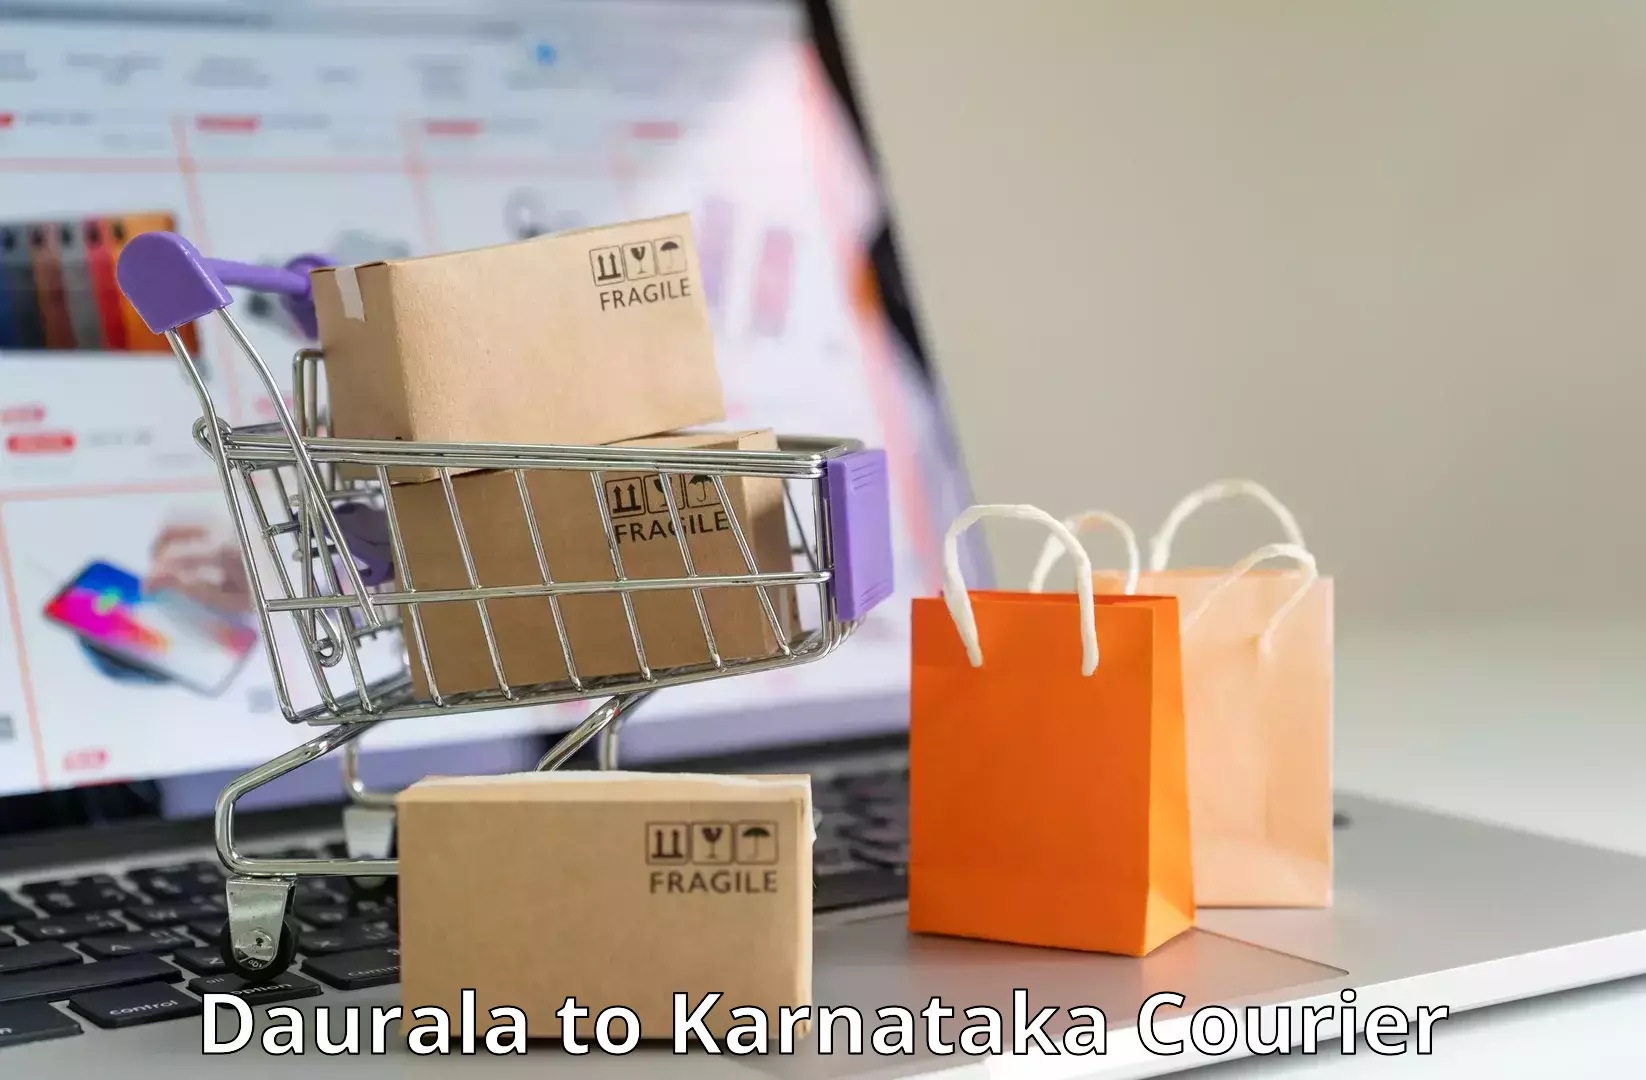 High-speed parcel service Daurala to Eedu